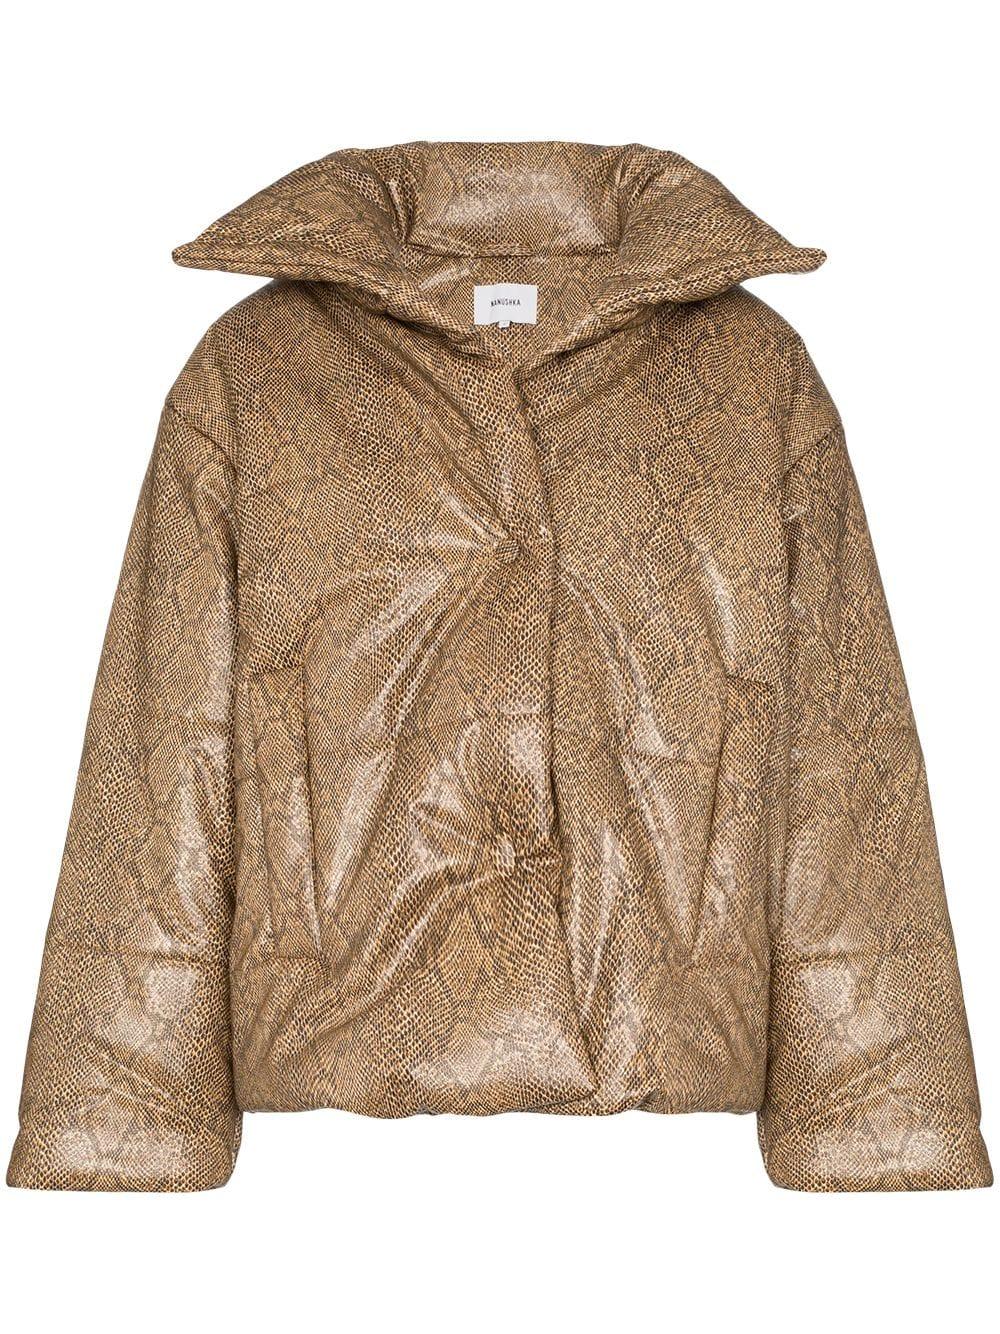 Nanushka Snakeskin-print Puffer Jacket in Brown - Lyst